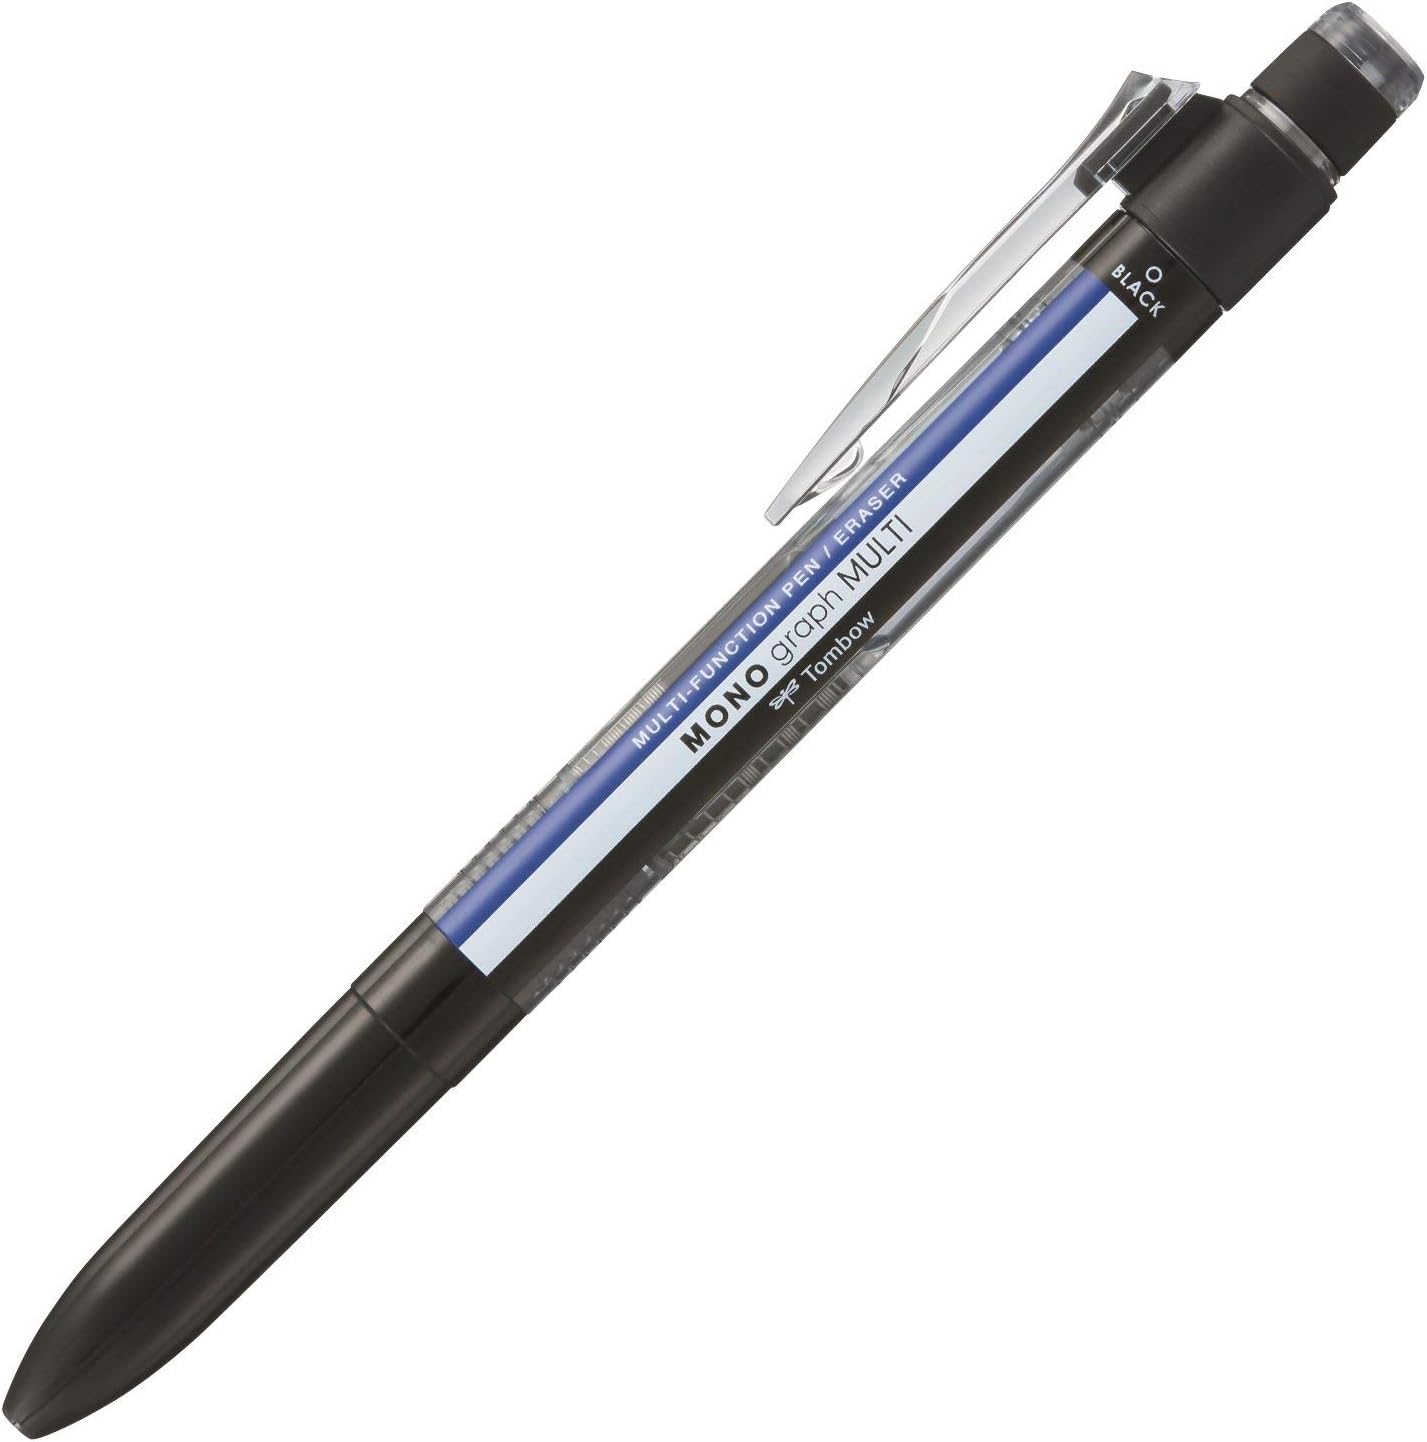 Tombow MONO graph MULTI 2 & S 0.5mm Multifunctional Pen